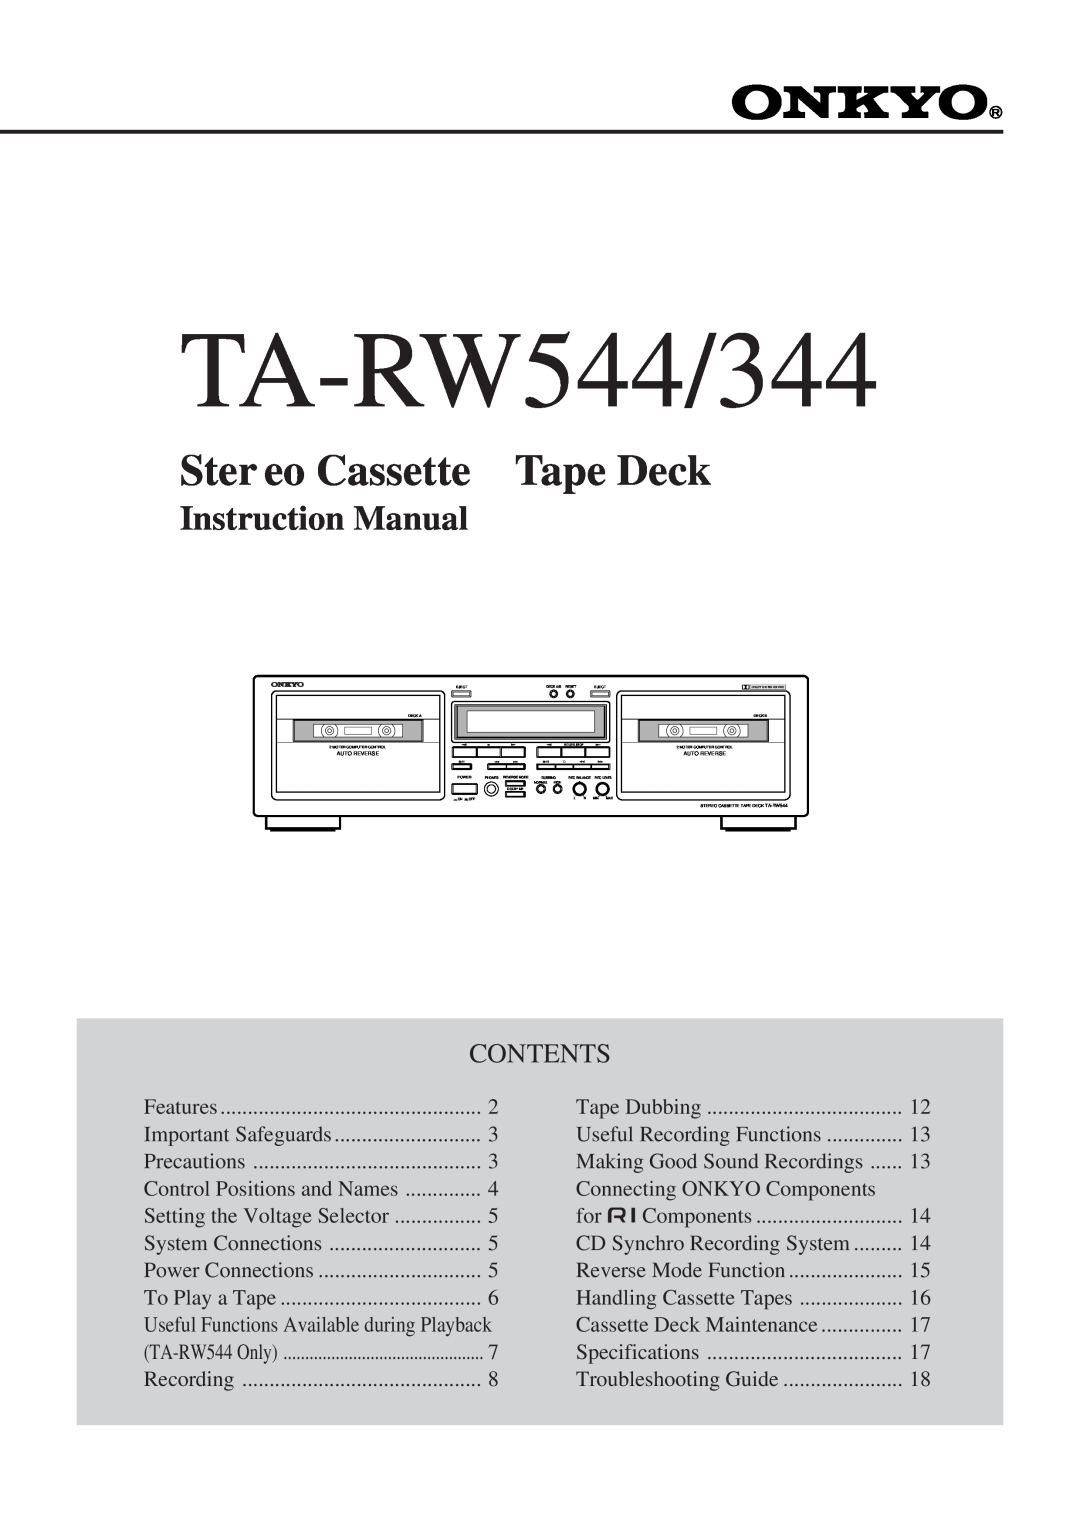 Onkyo TA-RW344 instruction manual Ster eo Cassette Tape Deck, TA-RW544/344, Contents 